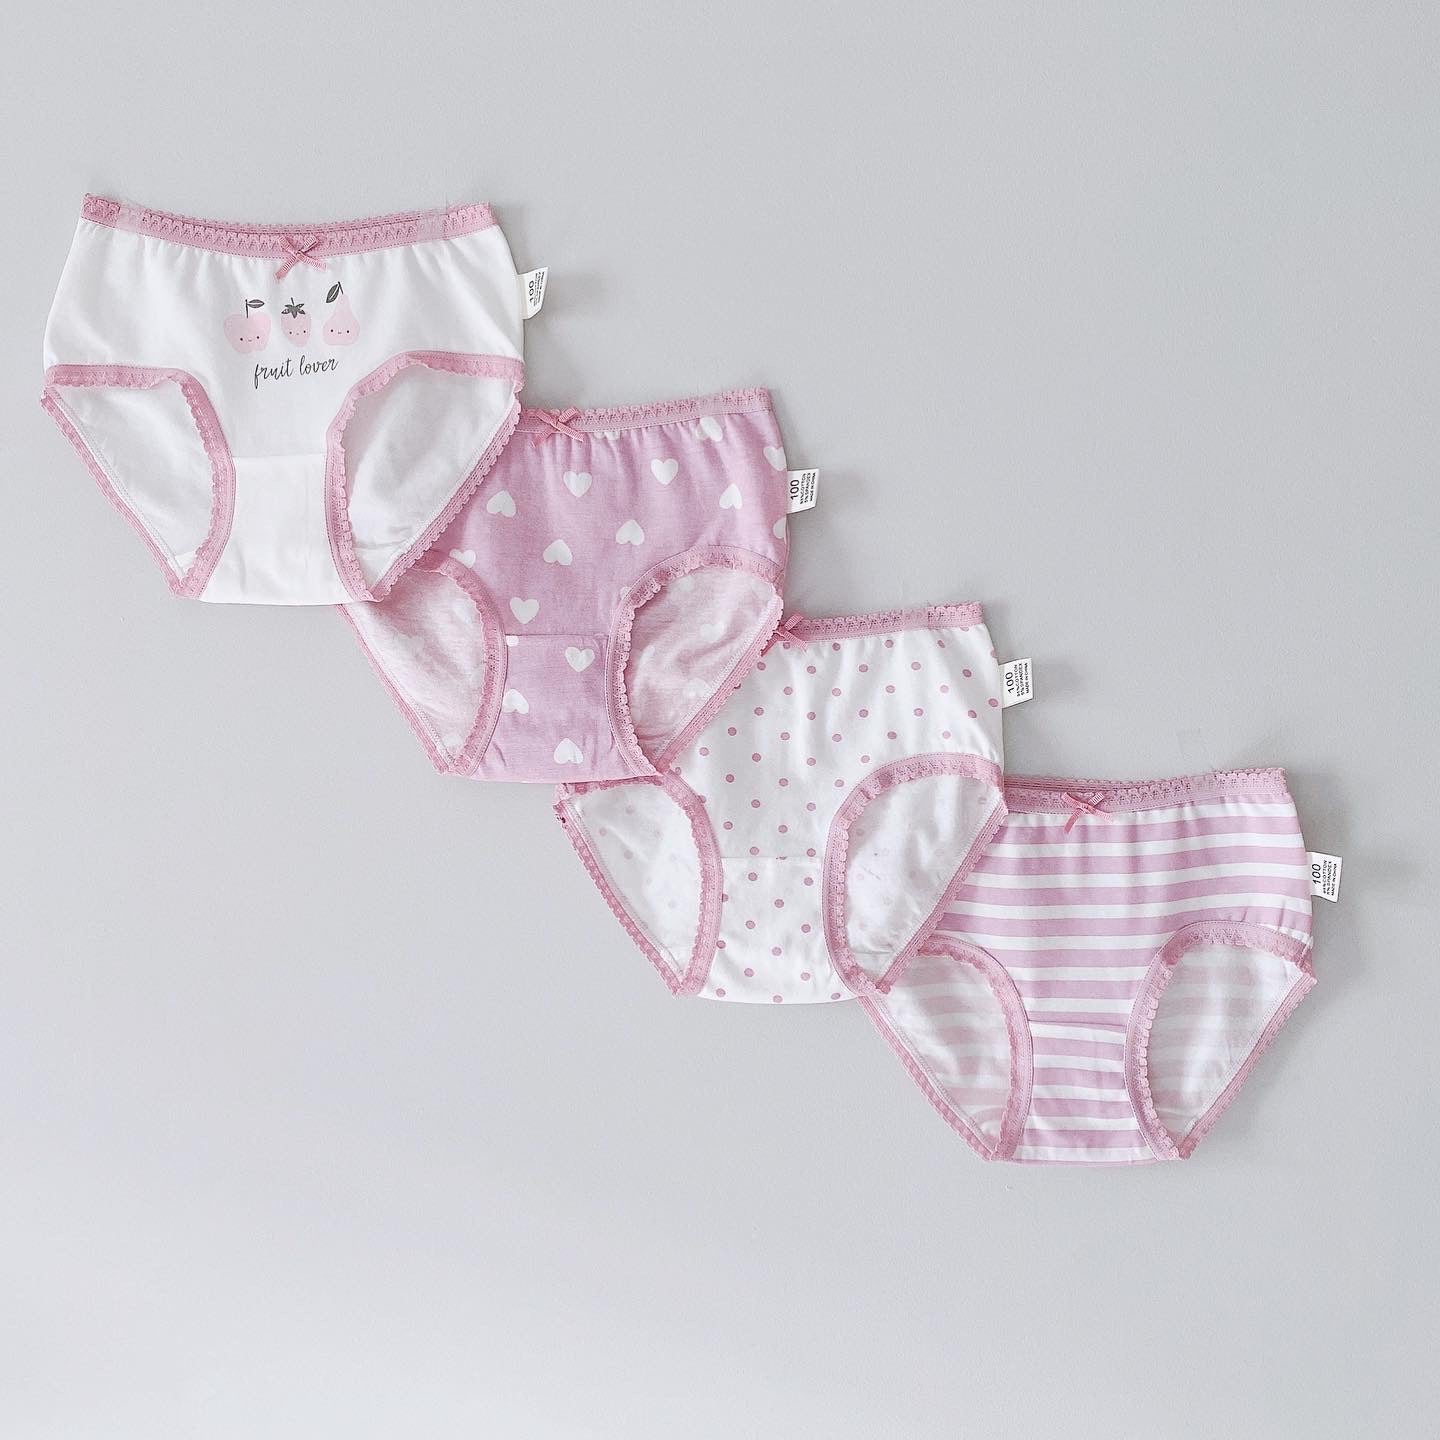  Dolphin&Fish Girls Underwear Toddler Girls Panties